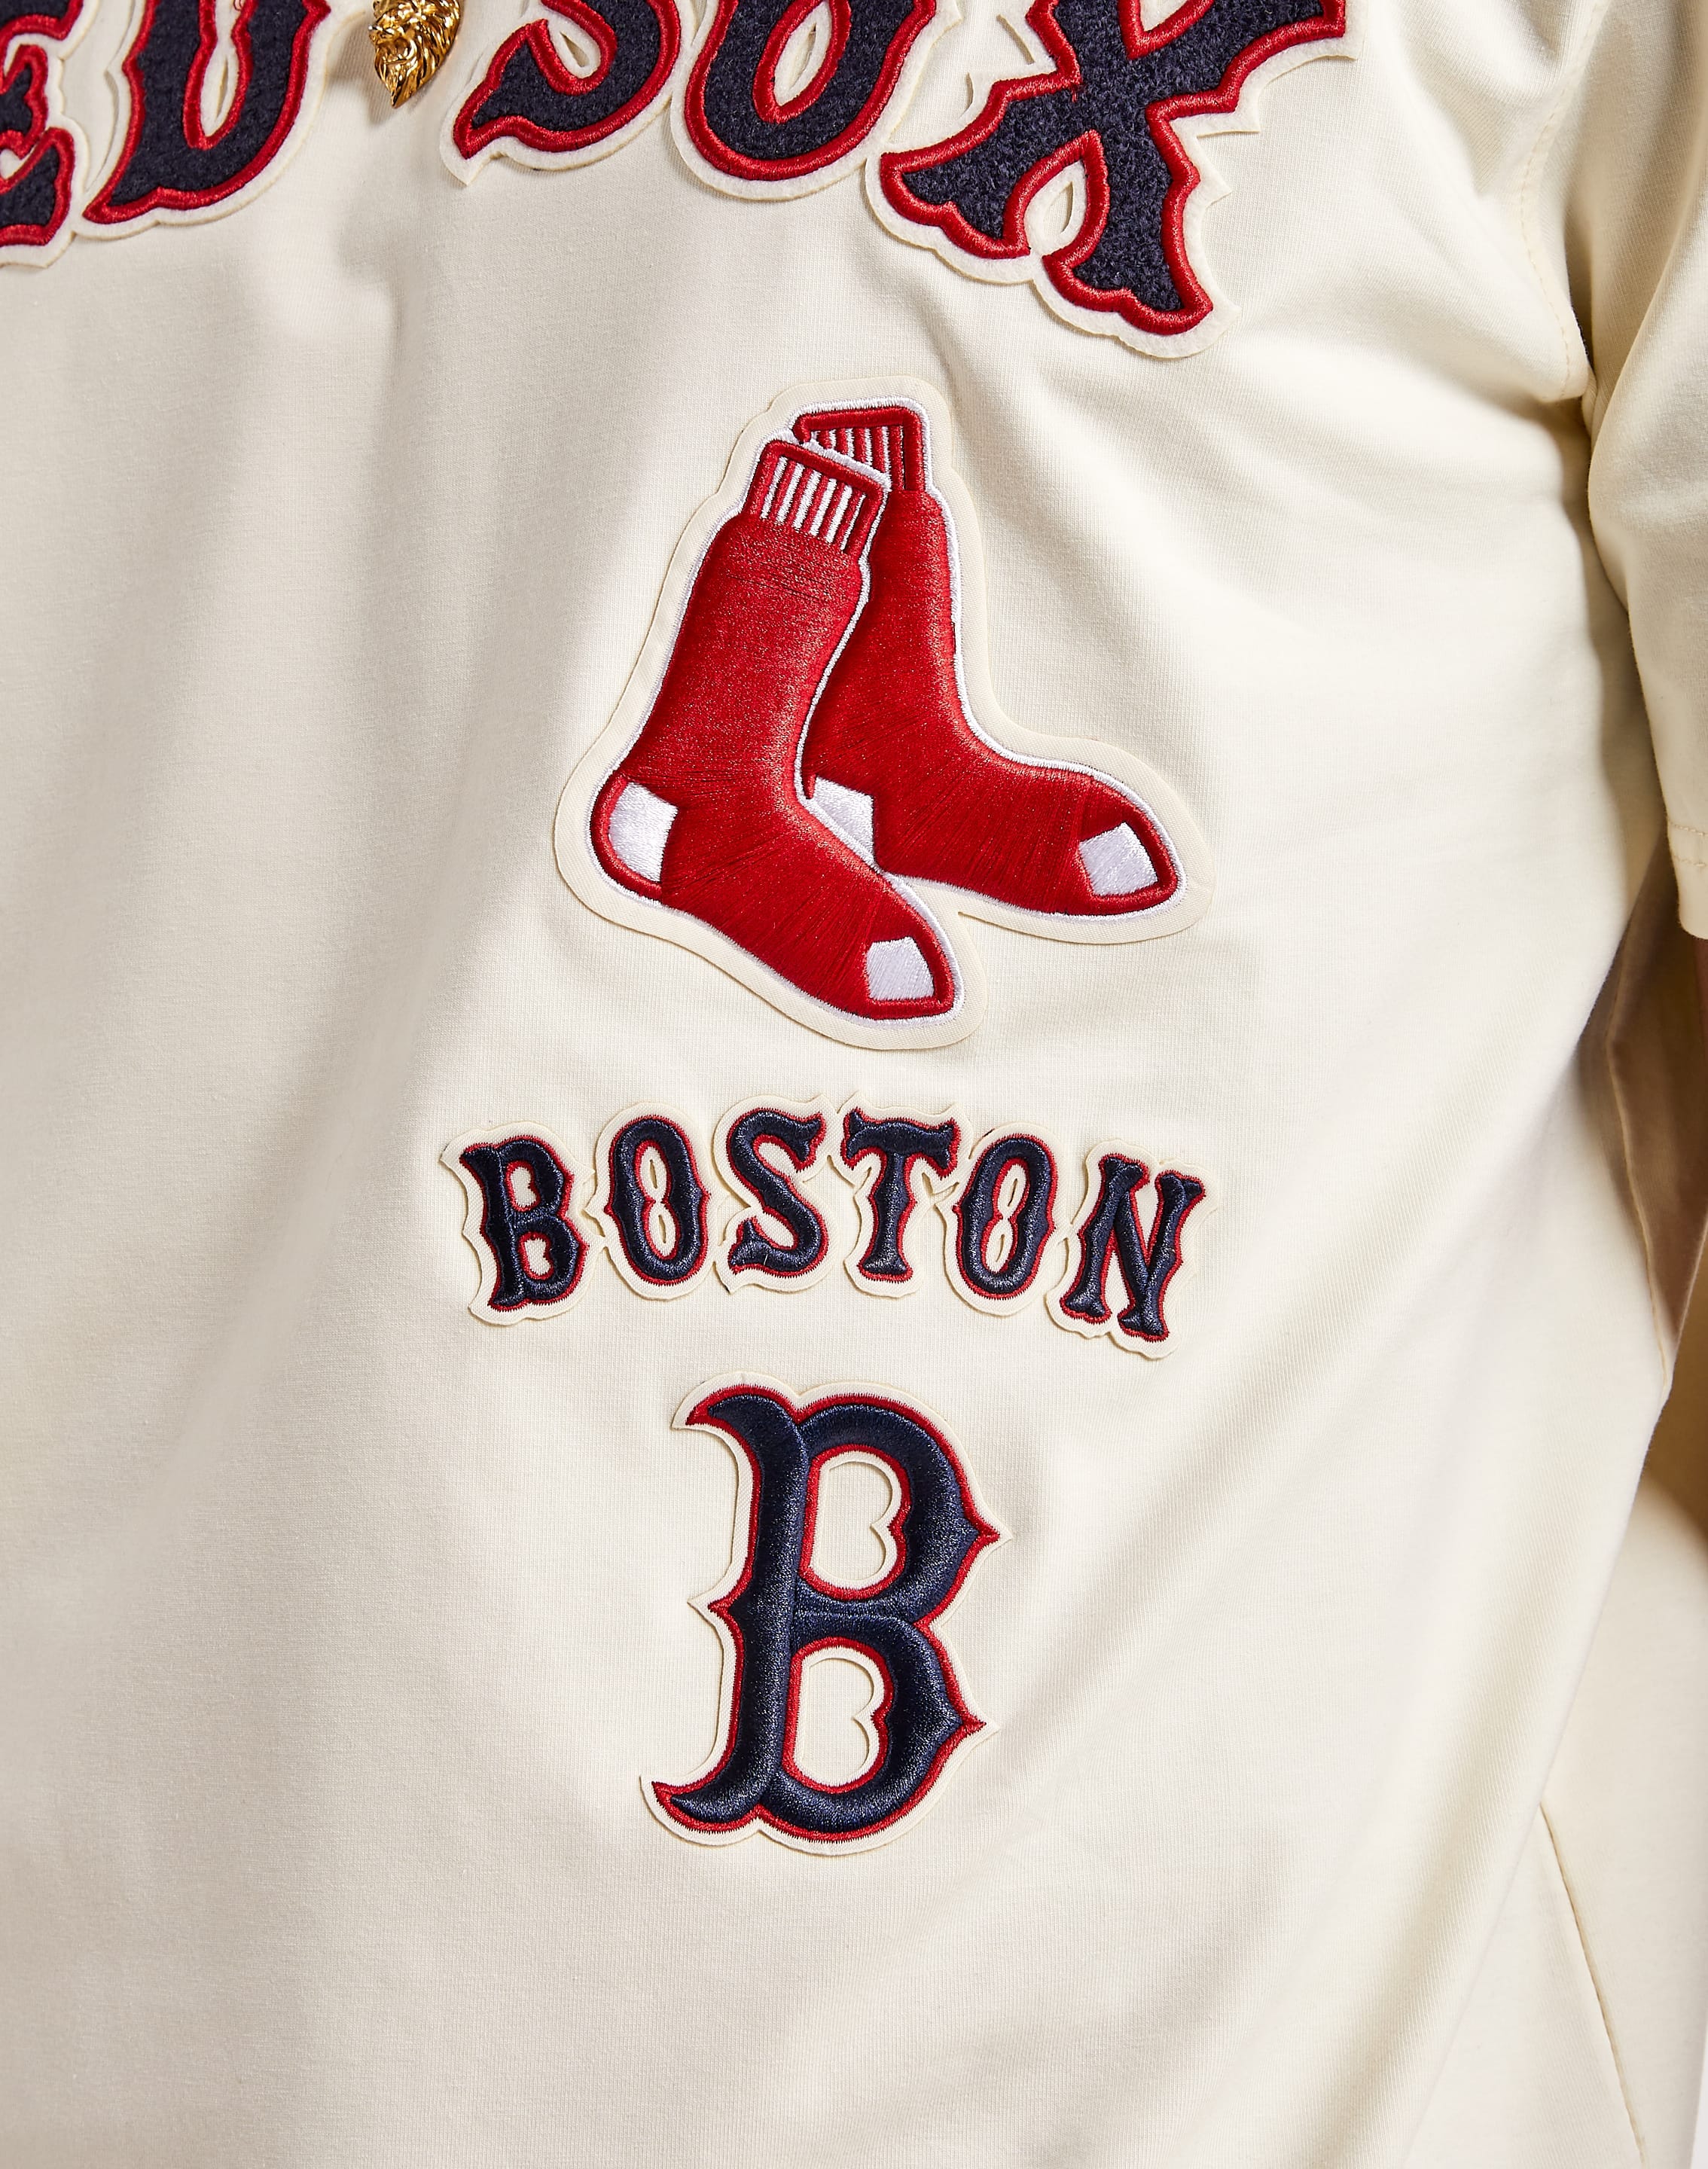 Pro Standard Men's Navy Boston Red Sox Team Logo T-shirt